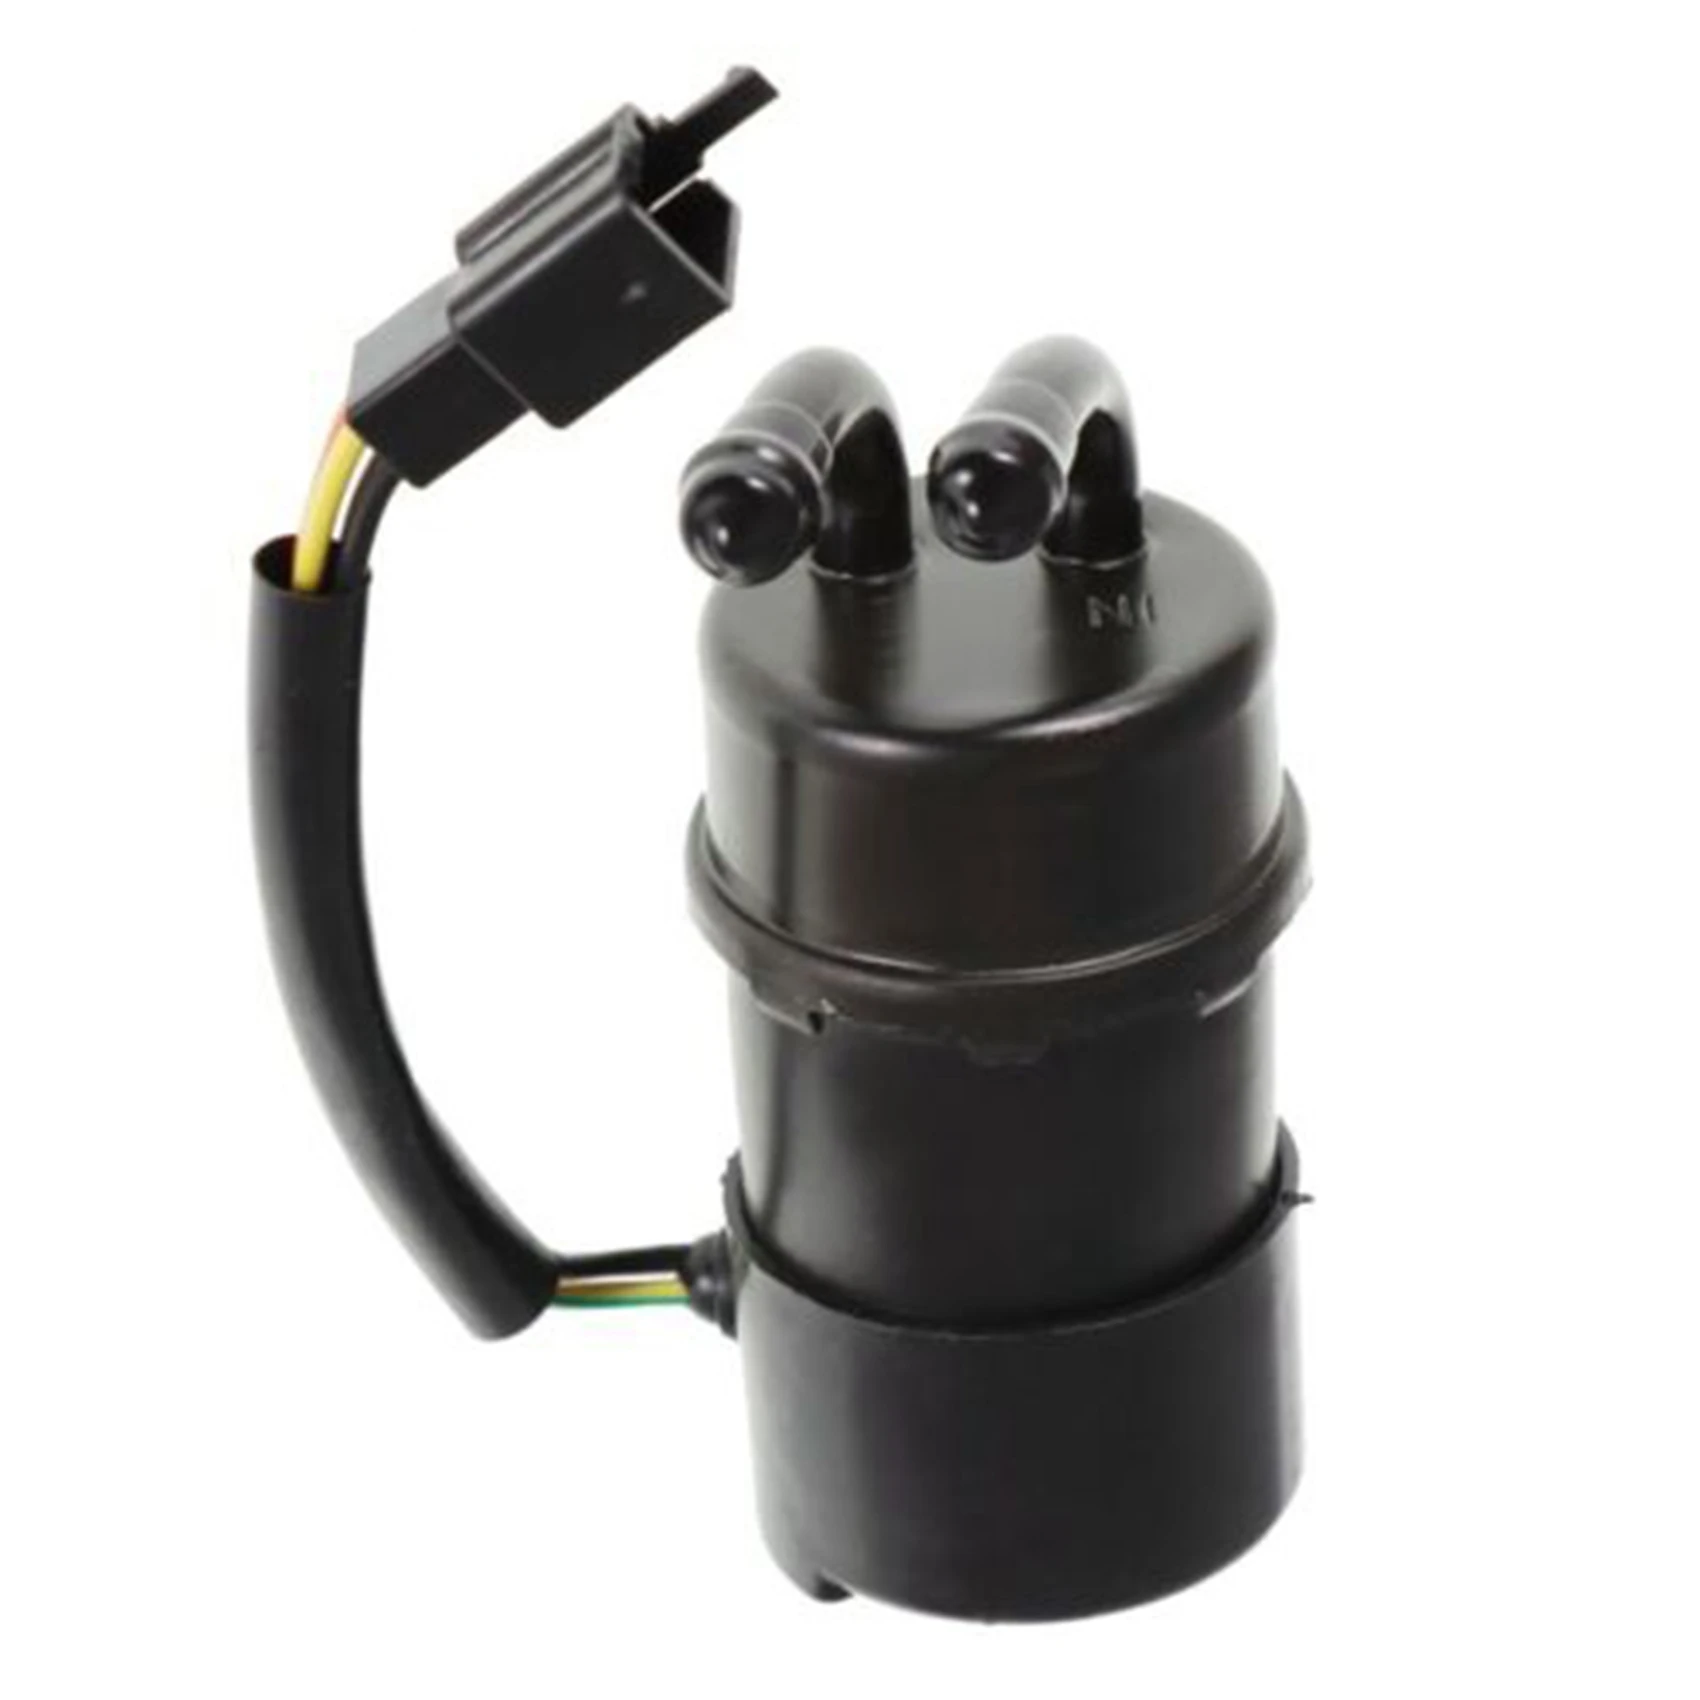 

Car Fuel Pump embly for Suzuki 1992-2009 Intruder VS700 VS750 Intruder VS800 OE 15100-38A10 (4 Wires Plug)